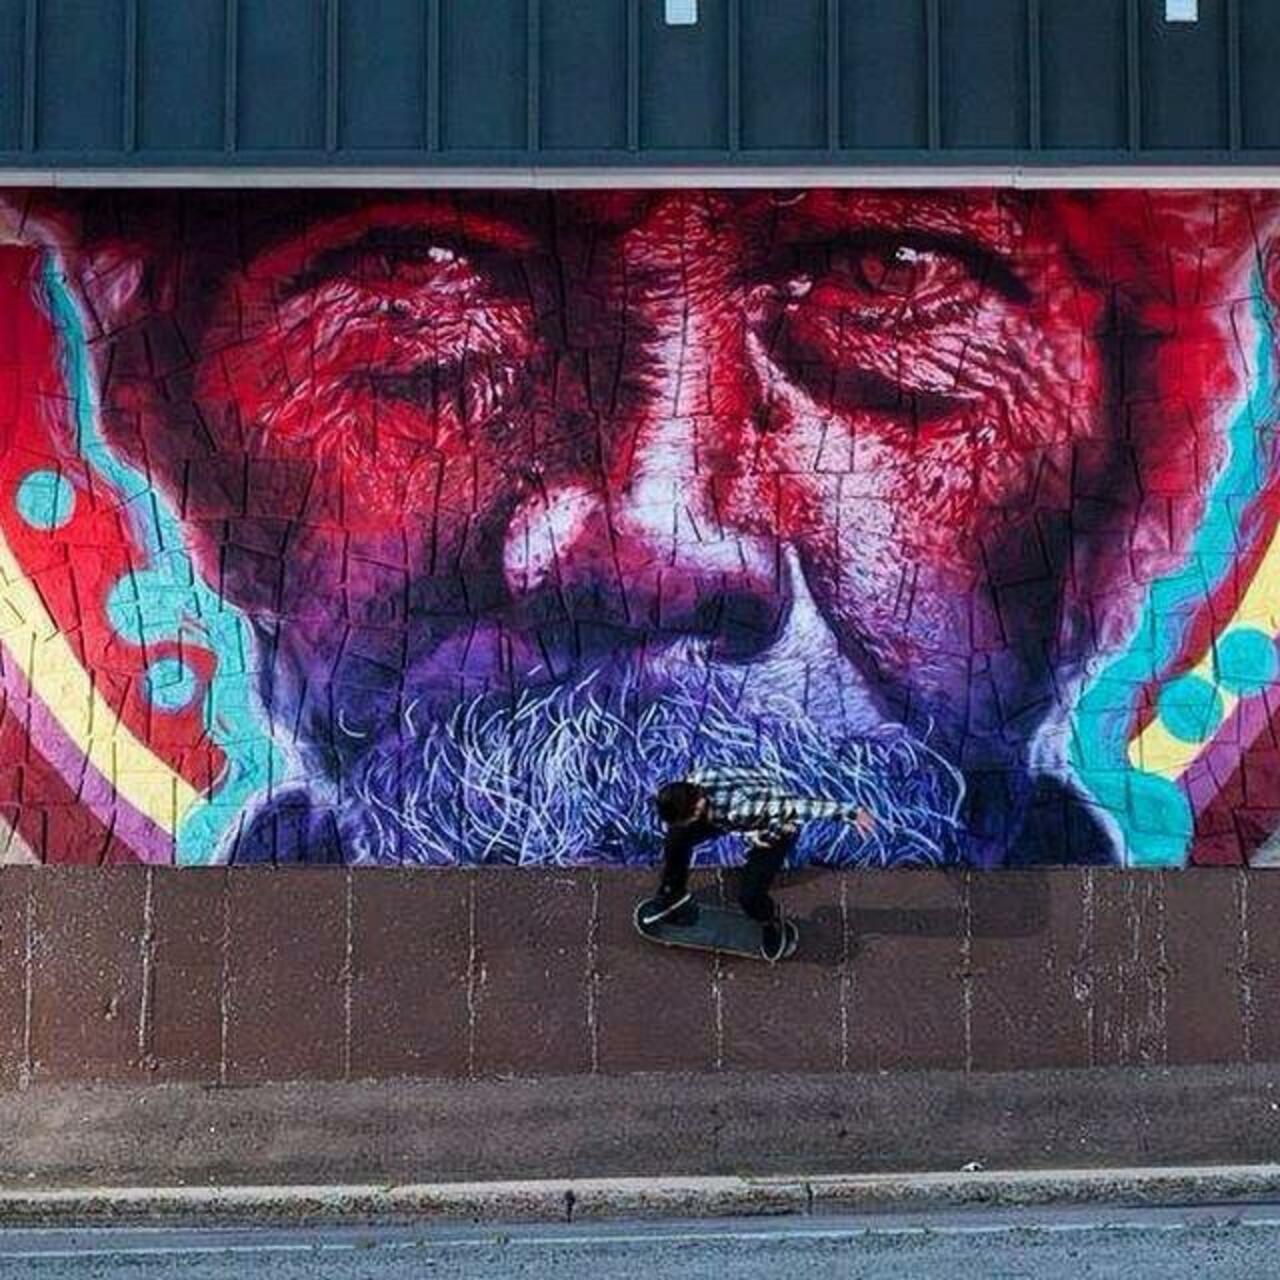 “@GoogleStreetArt: From Montcon, Canada, Kevin Ledo's class Street Art portrait 

#art #mural #graffiti #streetart http://t.co/rEtXSgk5qy”